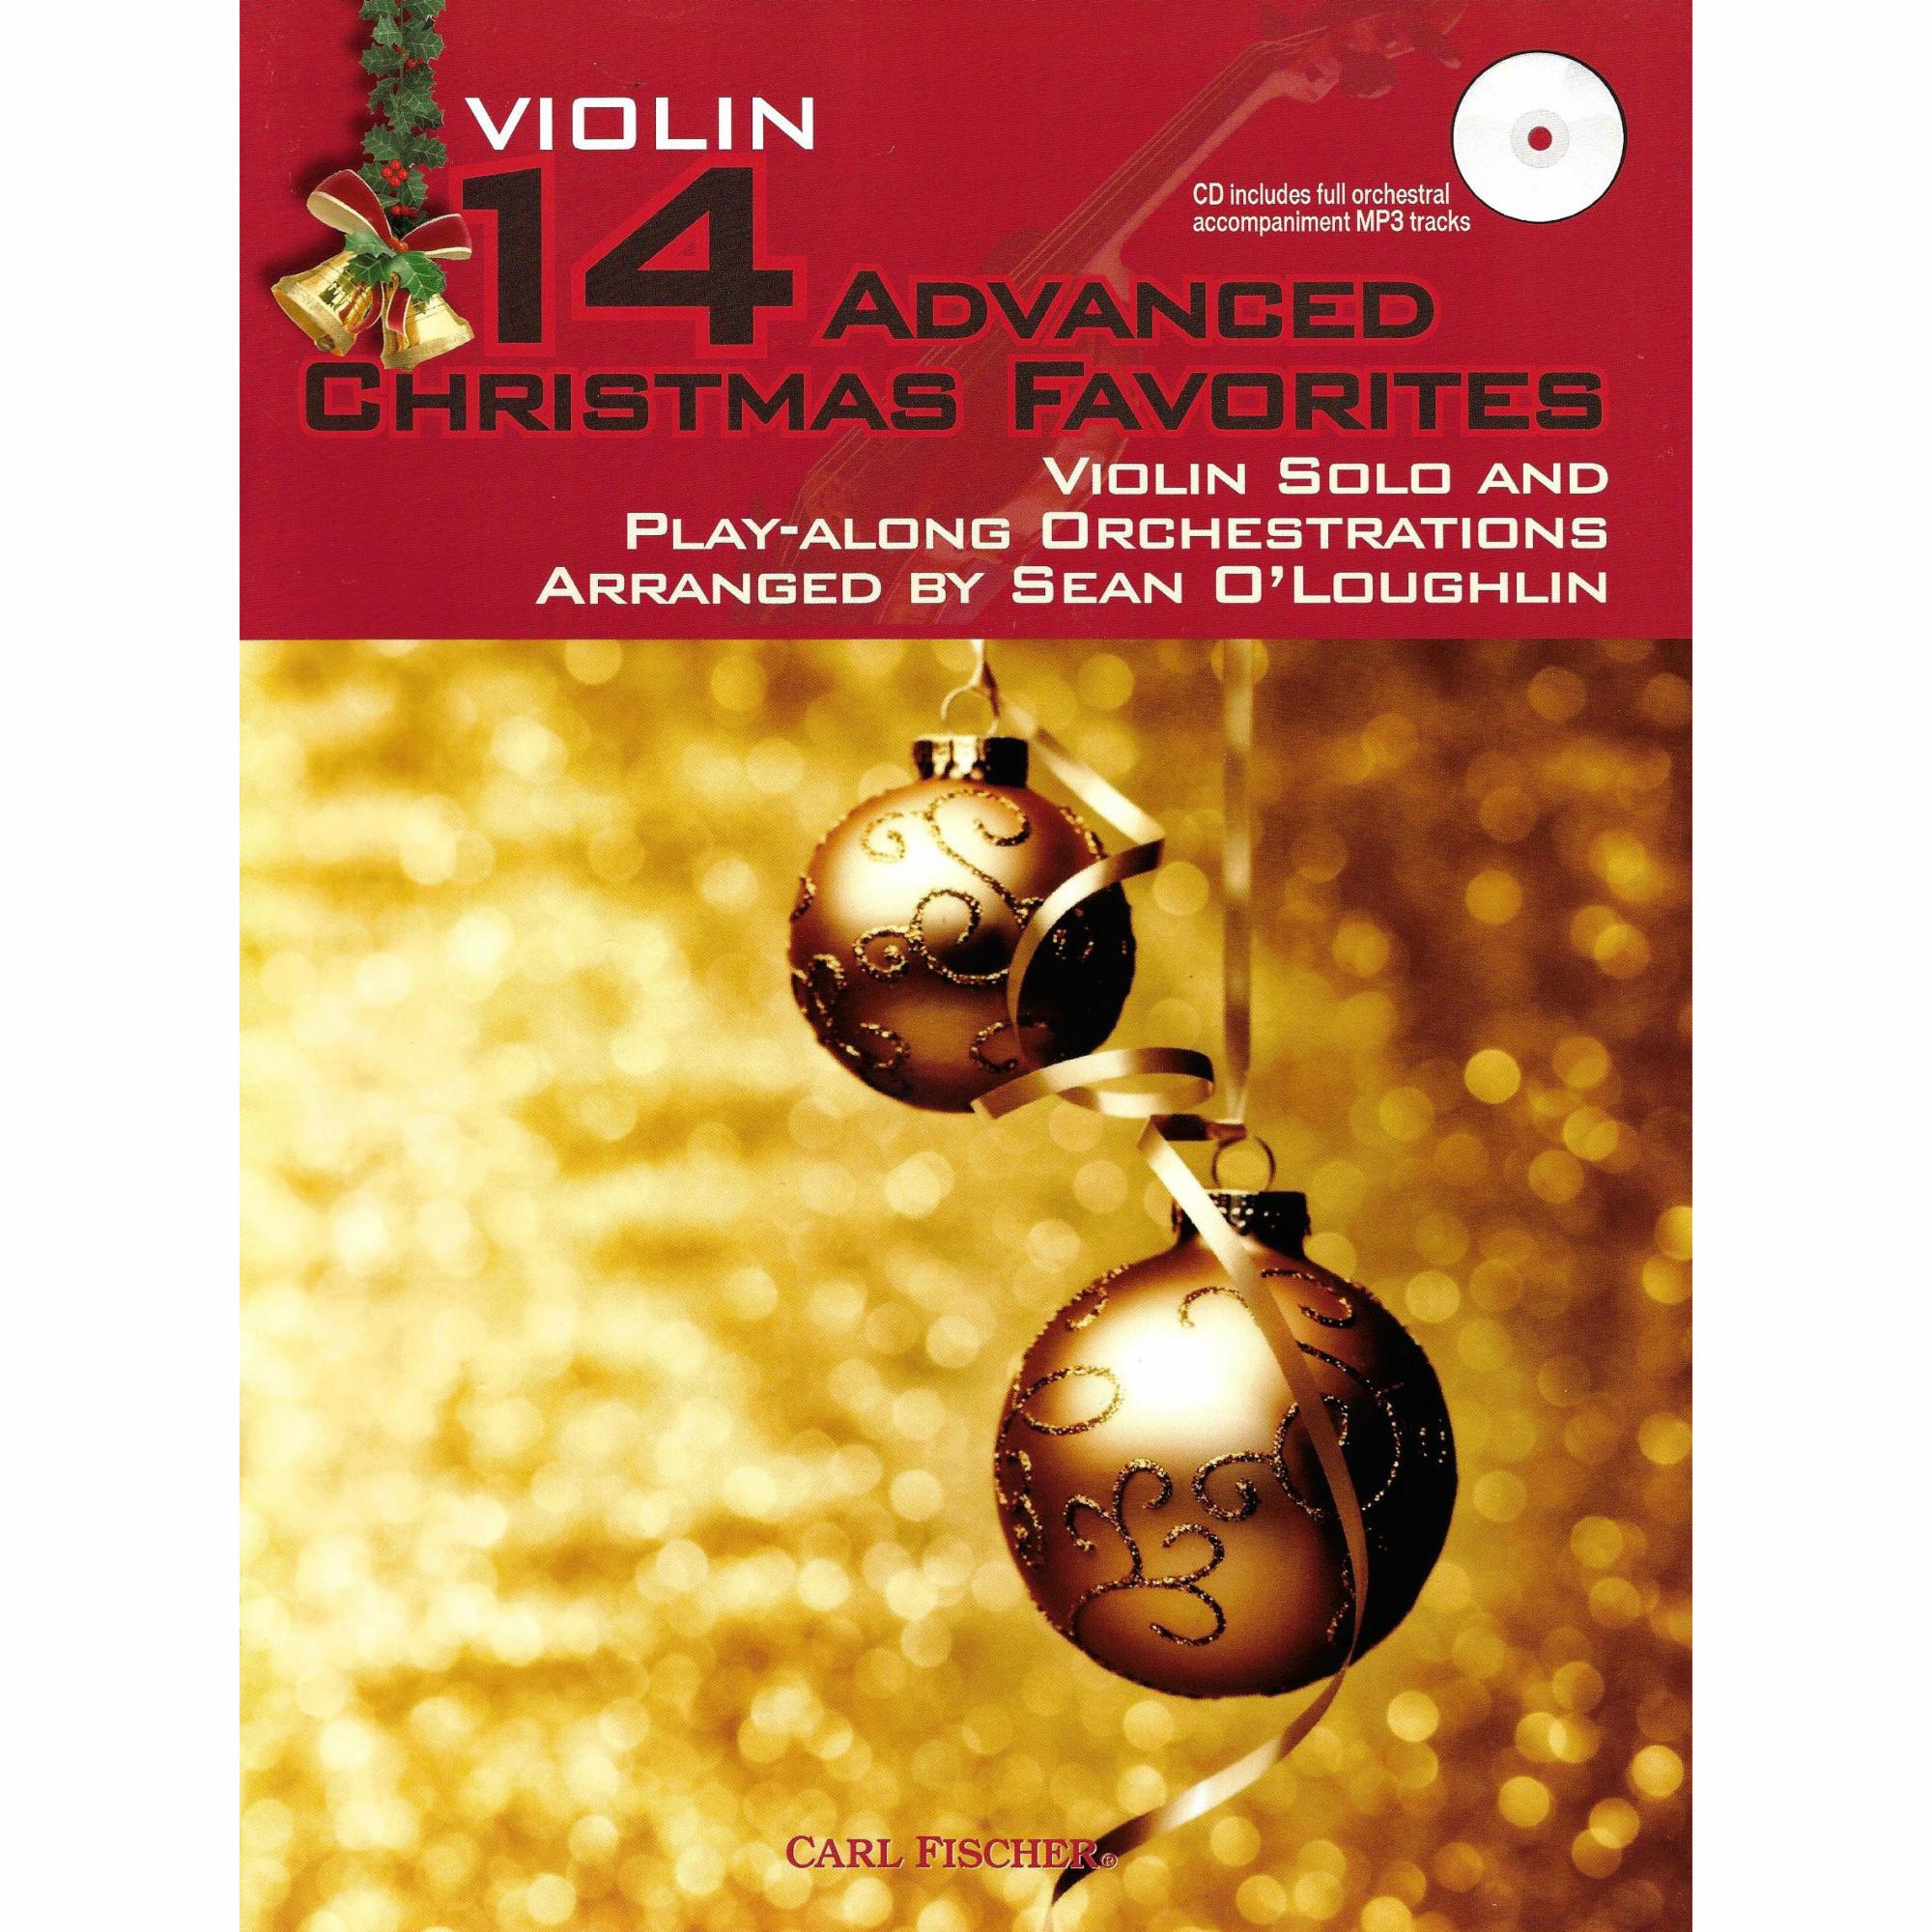 14 Advanced Christmas Favorites for Violin